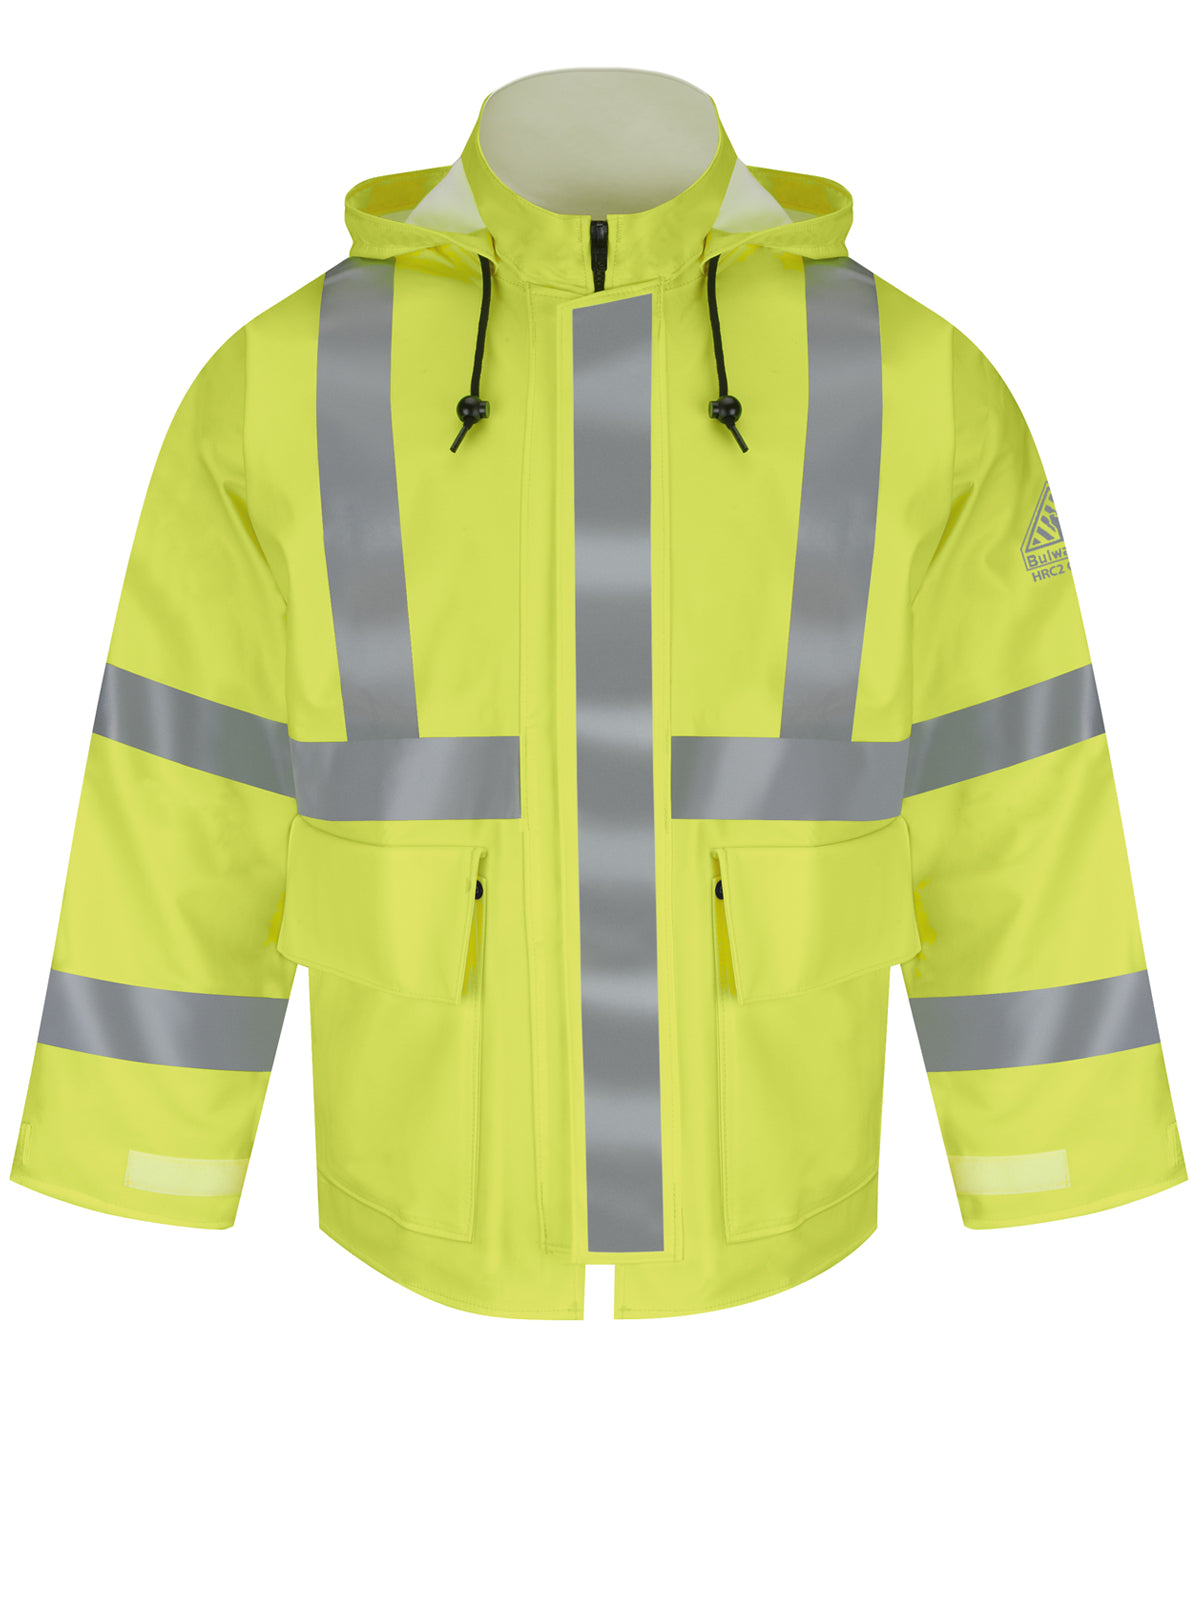 Men's Flame-Resistant Hi-Visibility Rain Jacket - JXN4 - Yellow